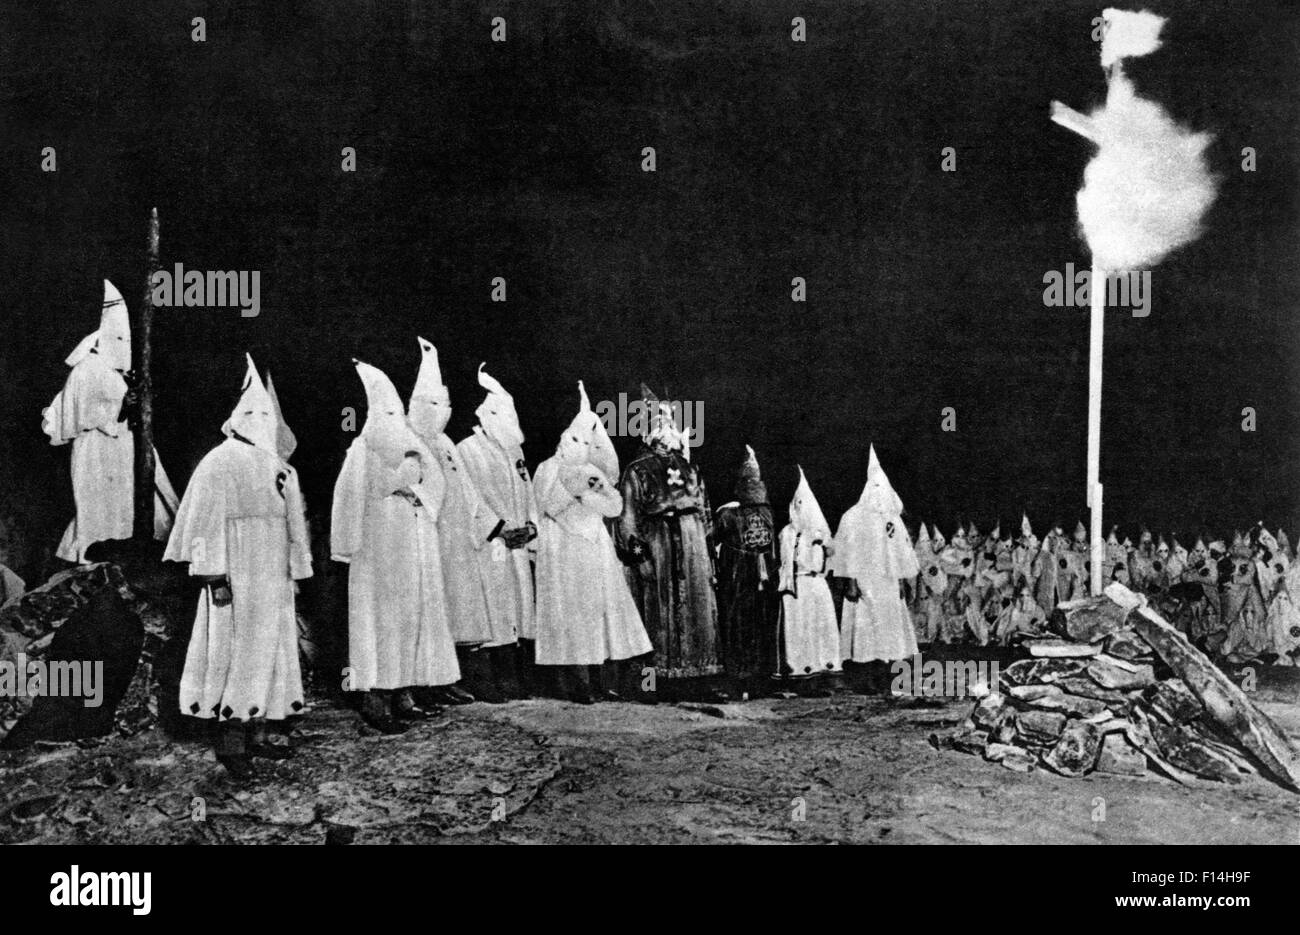 1930s KU KLUX KLAN KKK GATHERING WITH IMPERIAL WIZARD OPPOSITE A FIERY BURNING CROSS IN RURAL GEORGIA USA Stock Photo